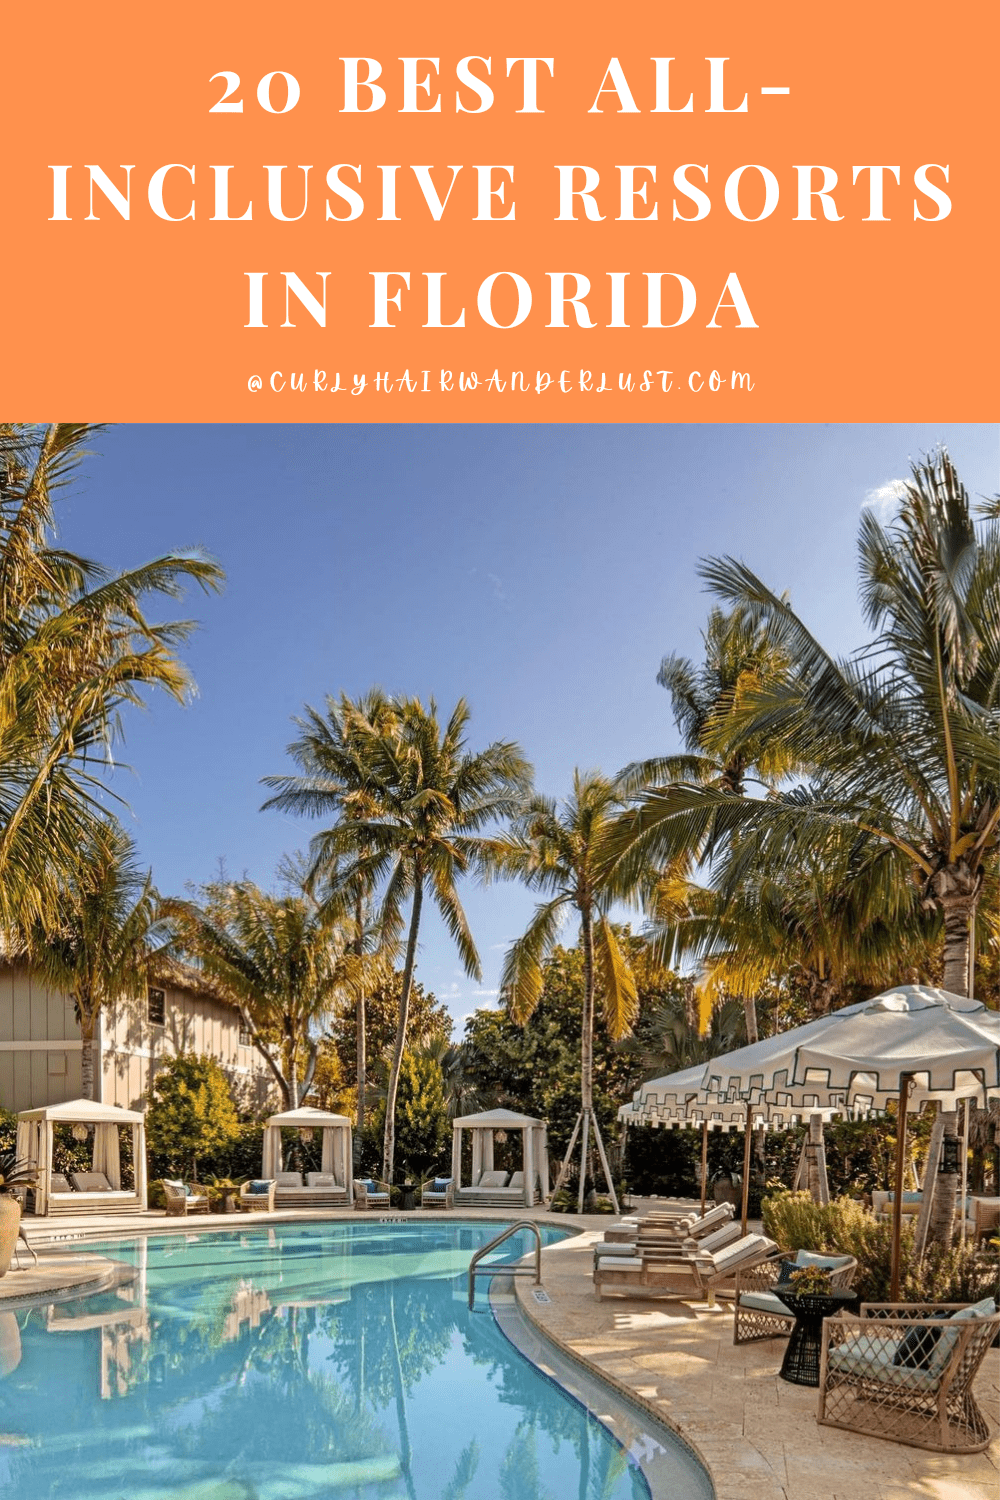 All inclusive resorts in Florida 